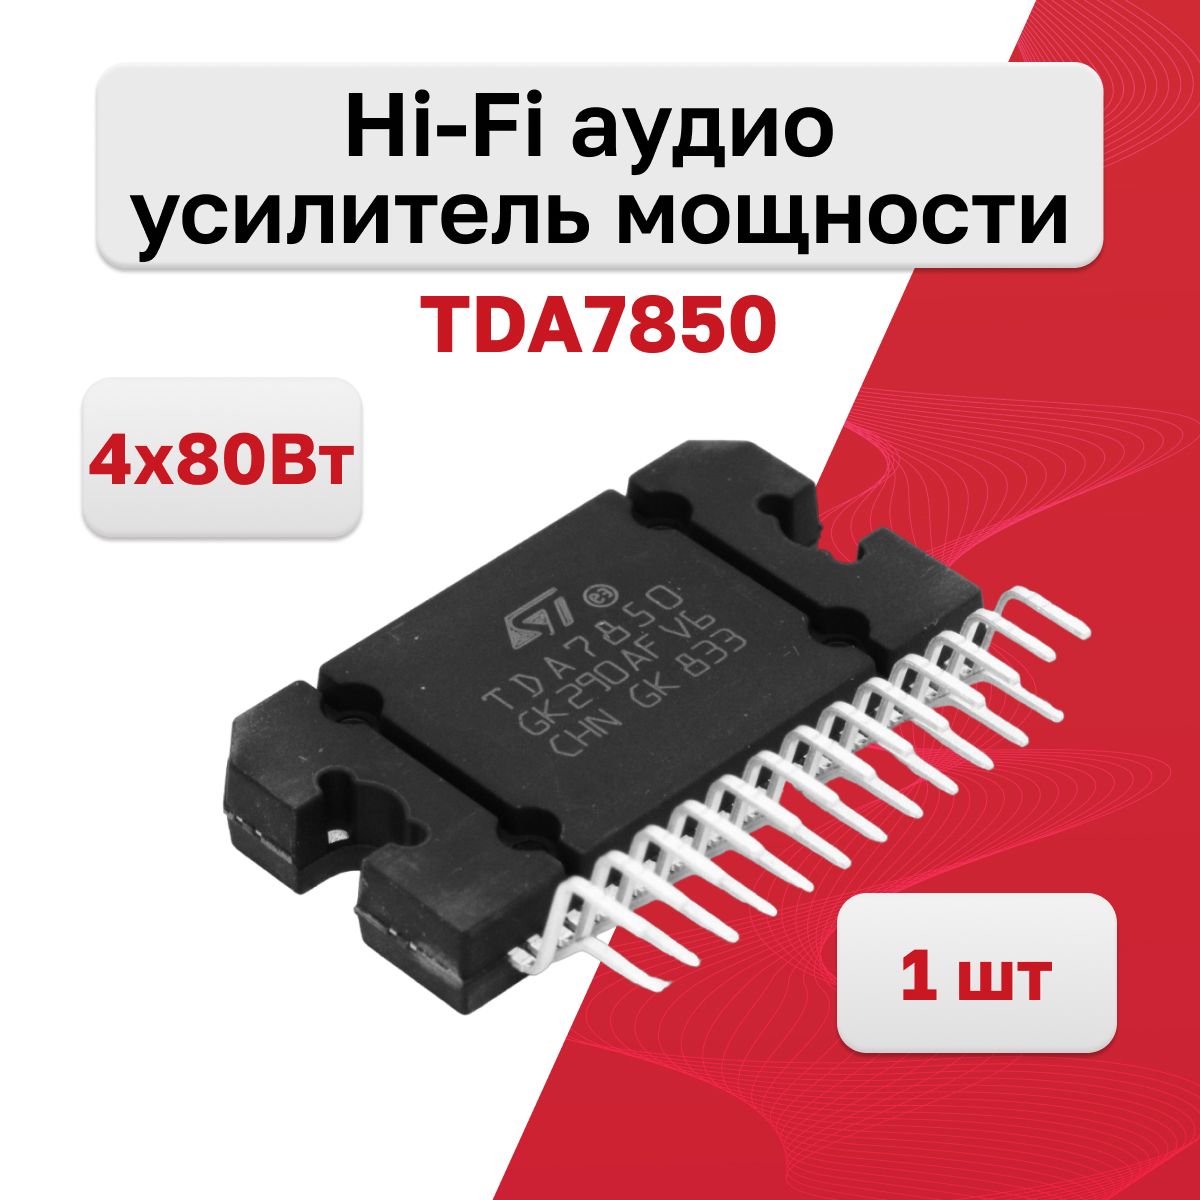 МикросхемаTDA7850,Hi-Fiaудиоусилительмощности,STMicroelectronics,1шт.